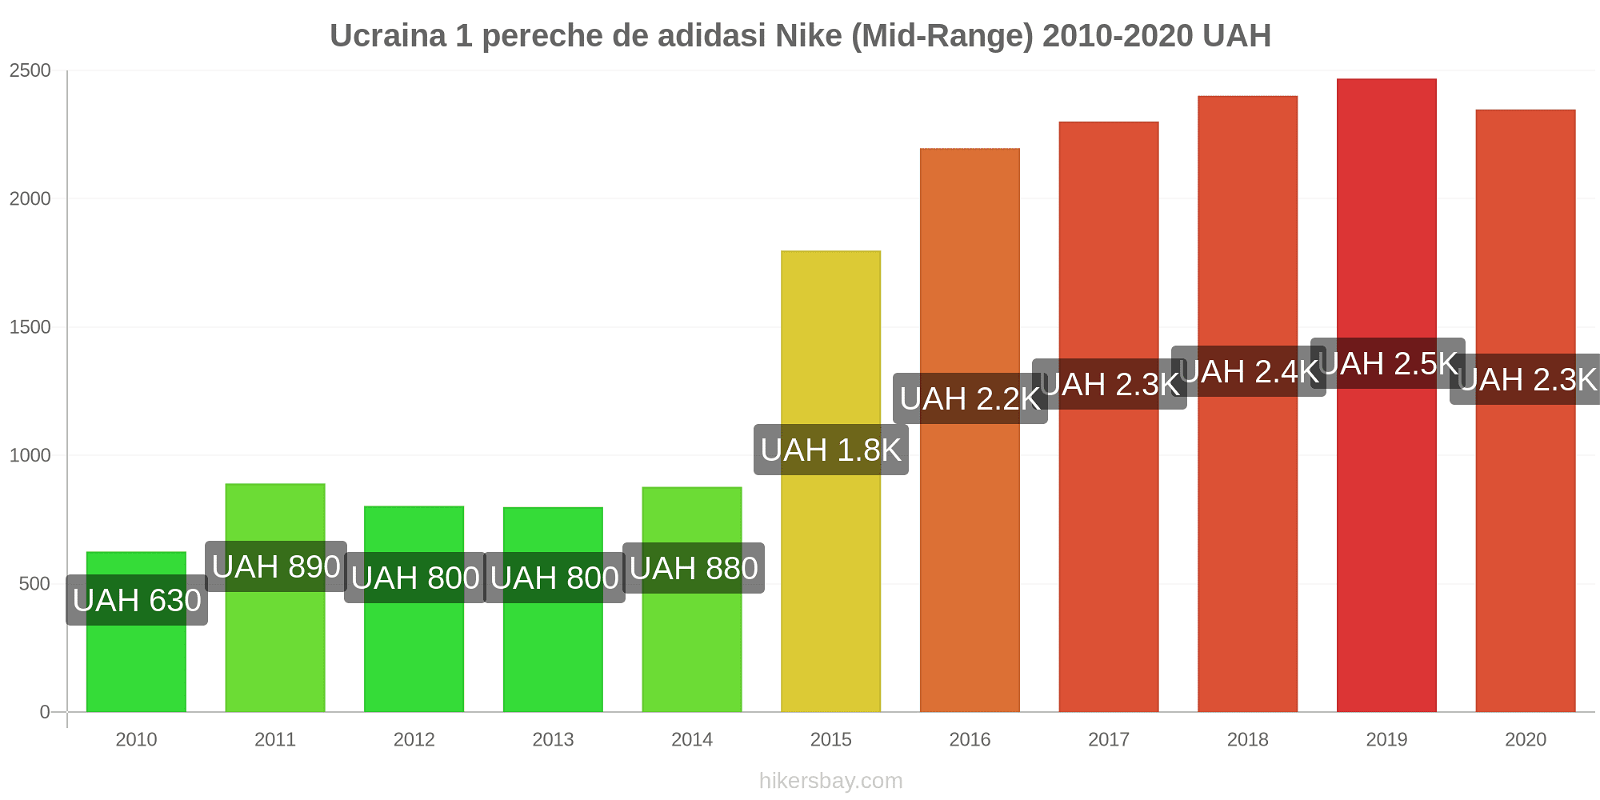 Ucraina modificări de preț 1 pereche de adidasi Nike (Mid-Range) hikersbay.com